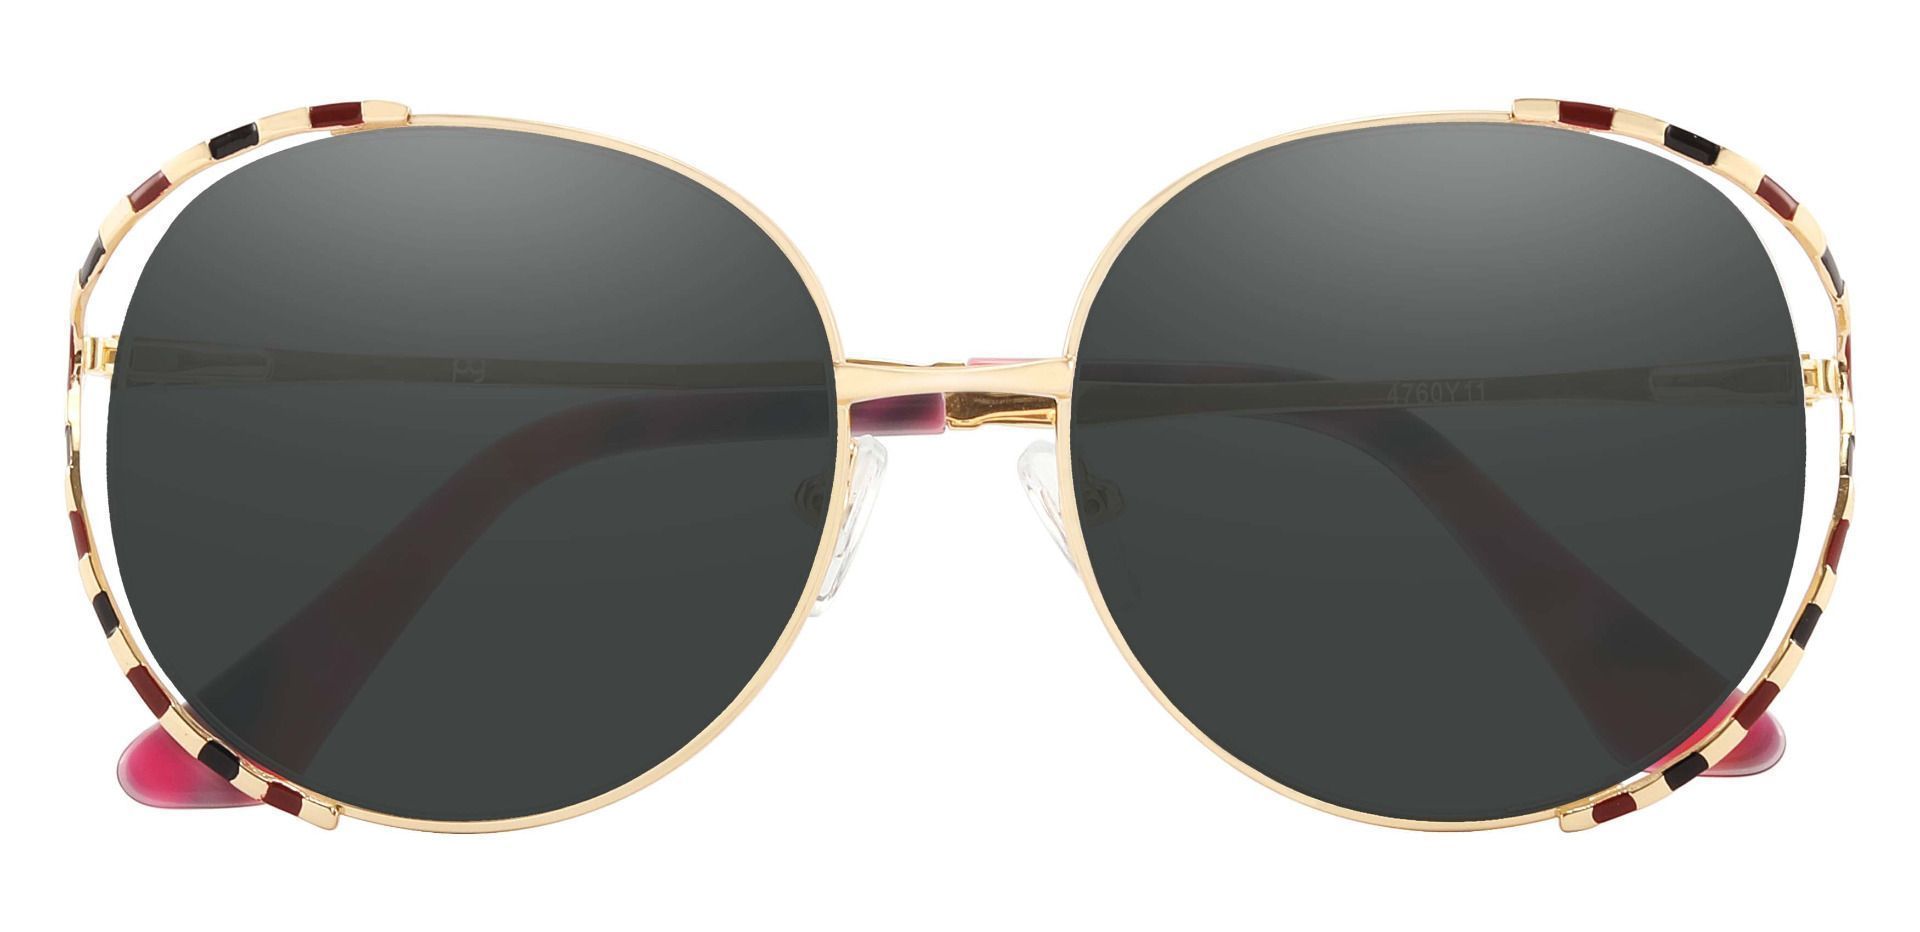 Dorothy Oval Progressive Sunglasses - Pink Frame With Gray Lenses